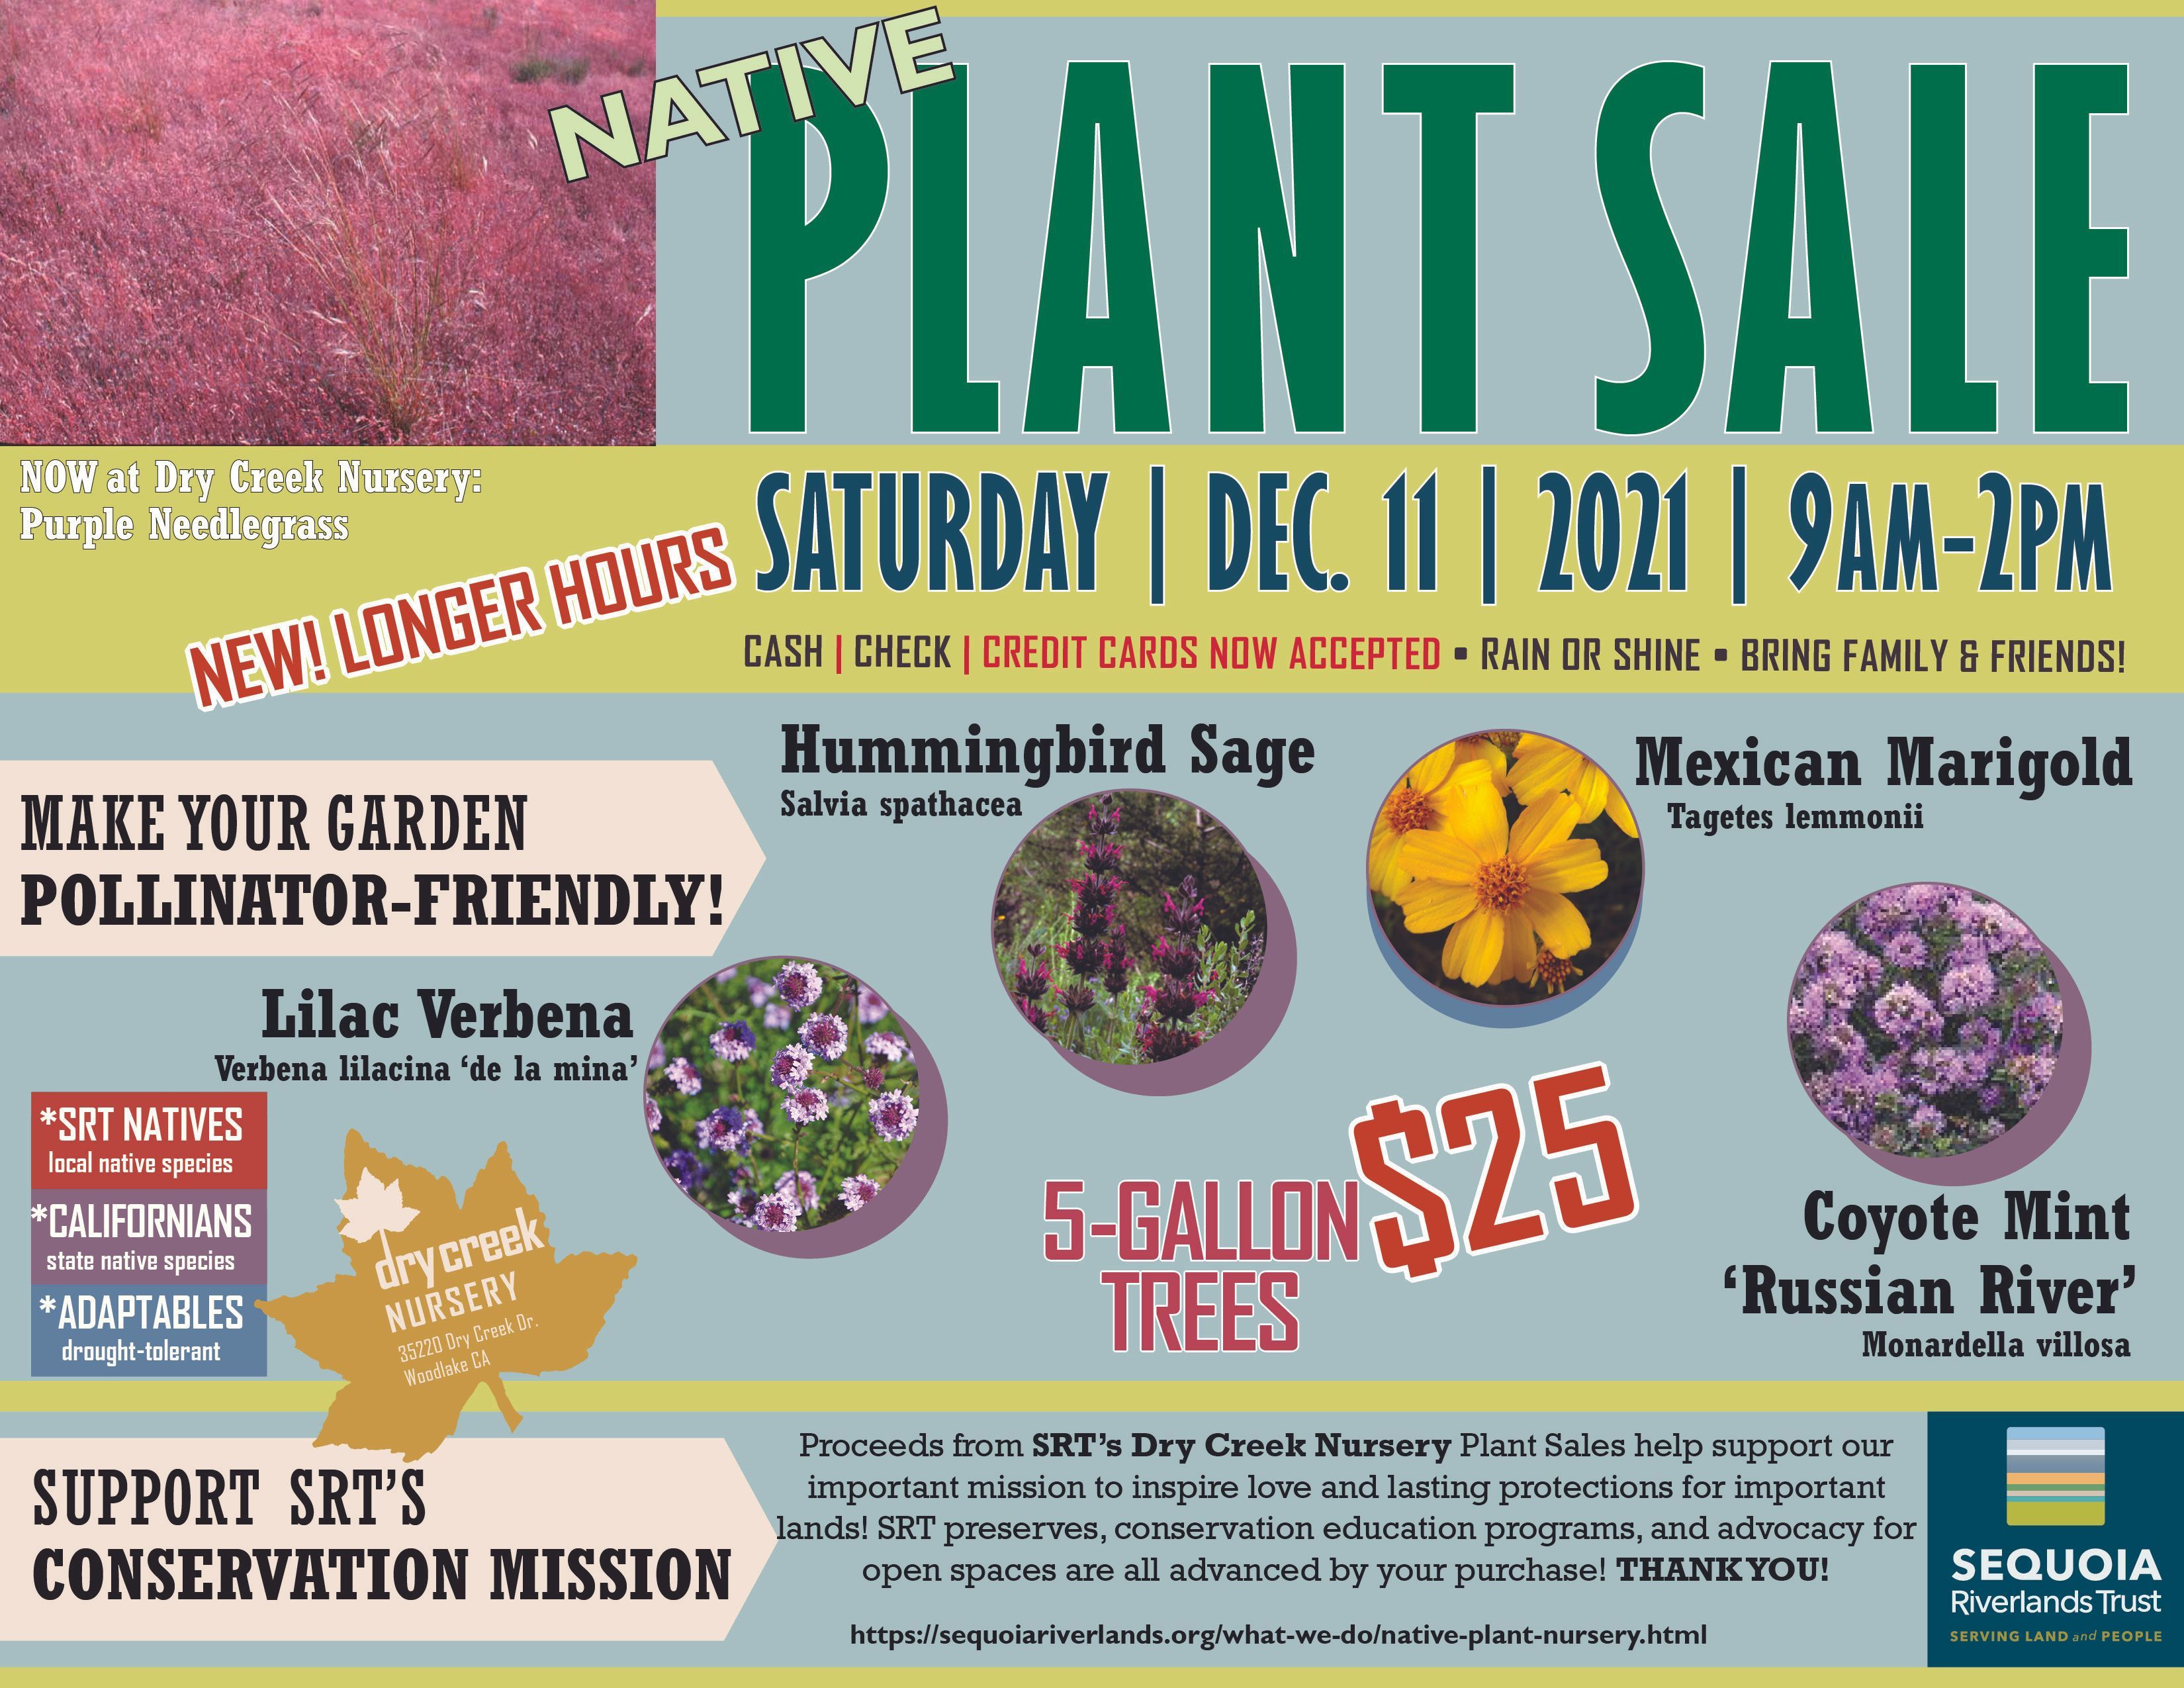 Boost winter gardening efforts at Dry Creek Nursery Winter Plant Sale 12/11